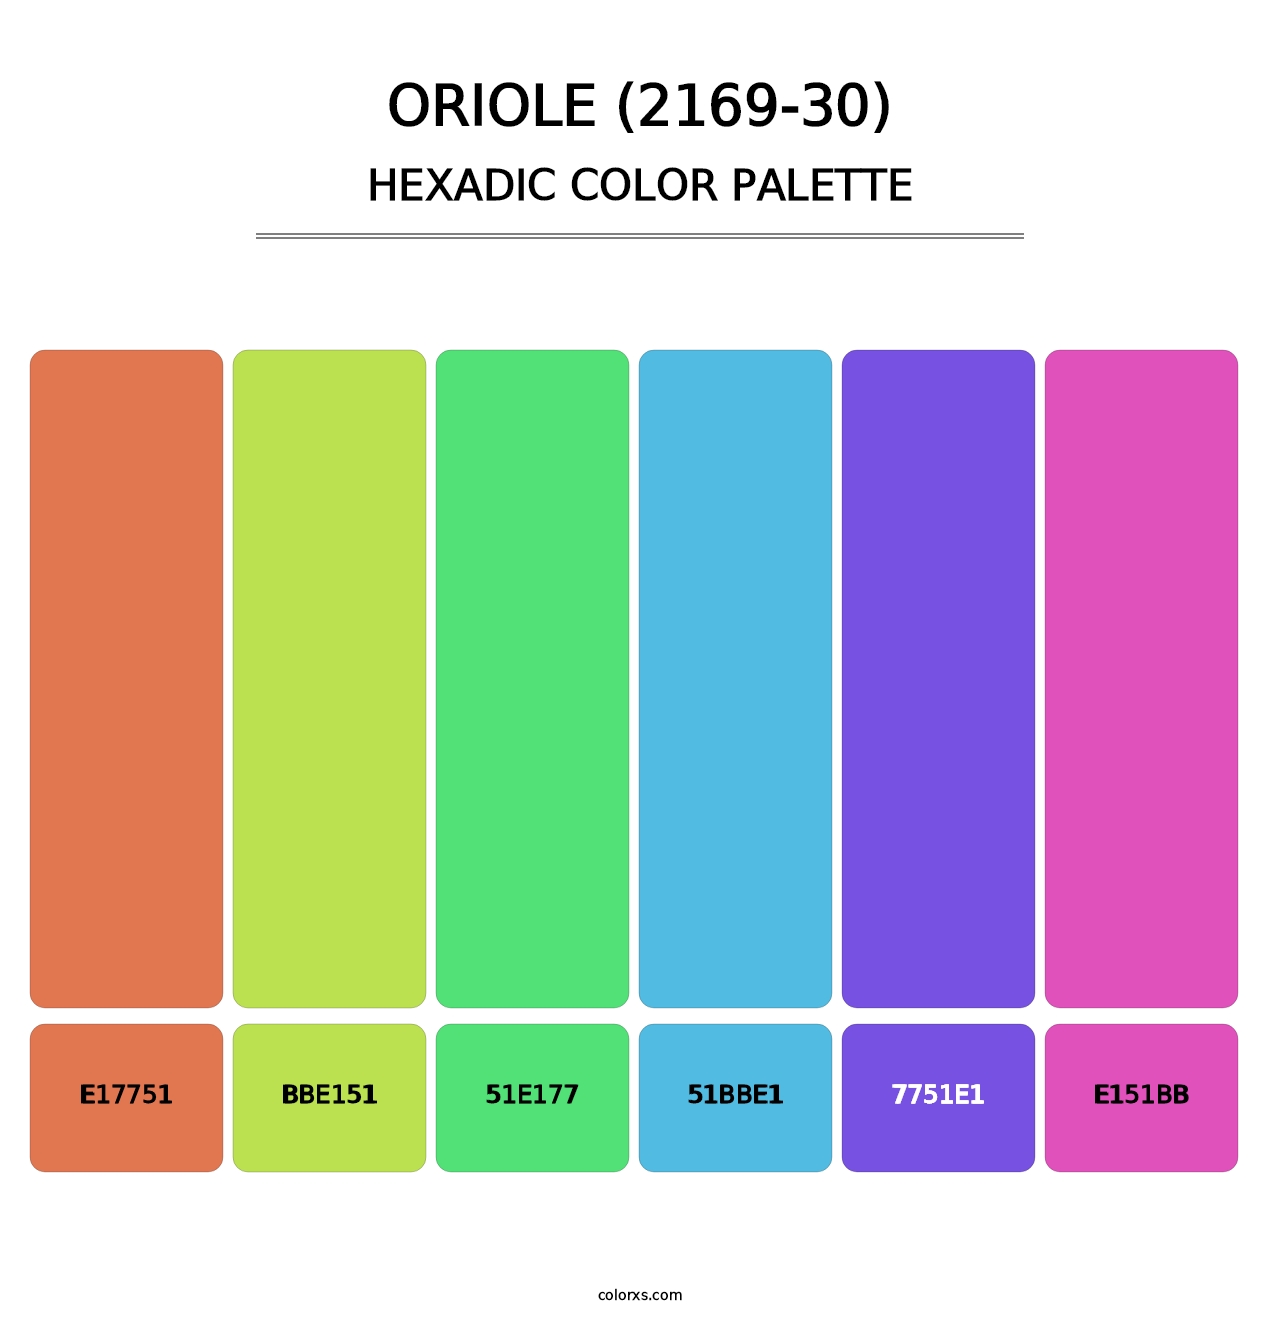 Oriole (2169-30) - Hexadic Color Palette